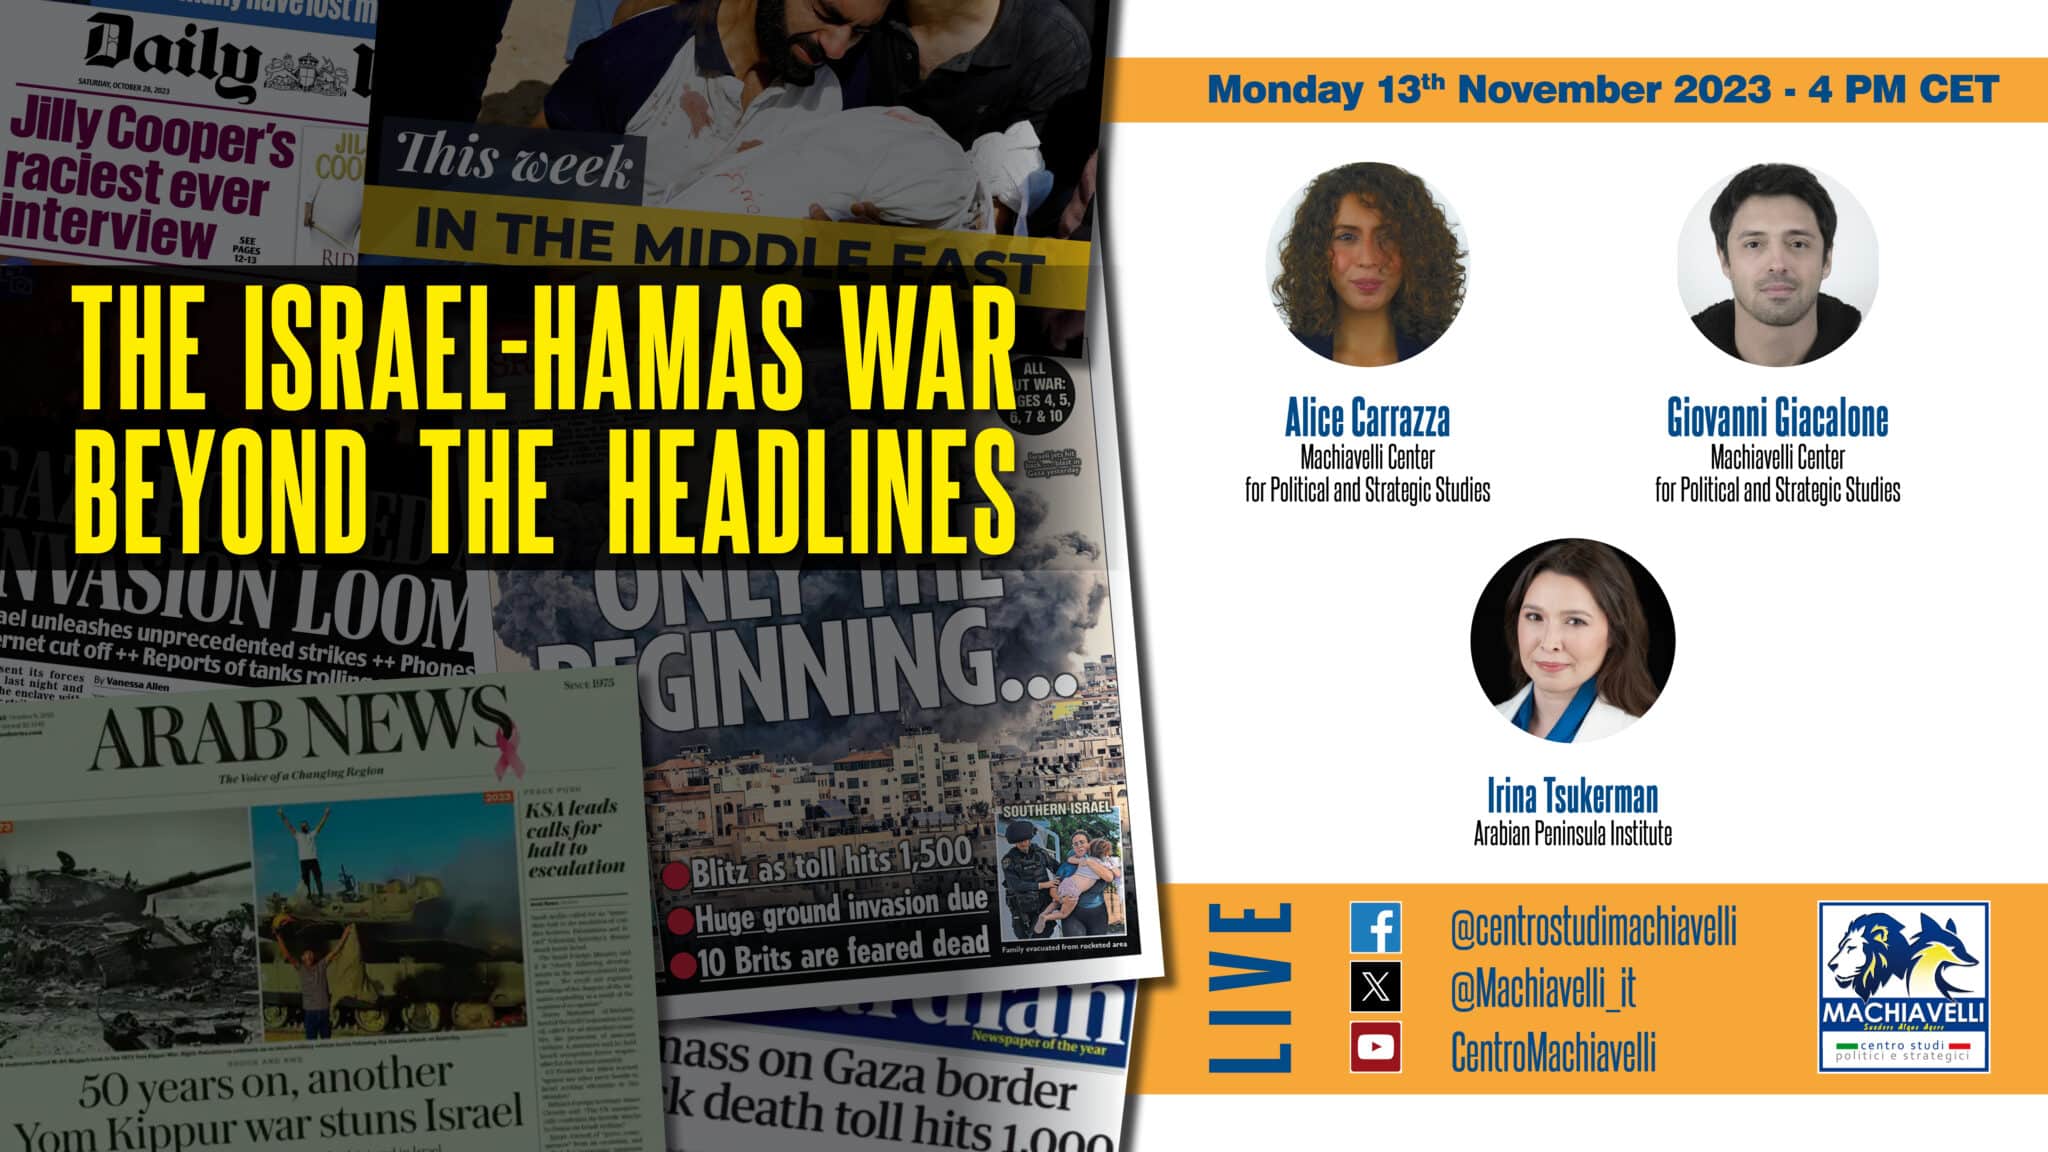 israel hamas war beyond the headlines, giovanni giacalone, irina tsukerman, alice carrazza